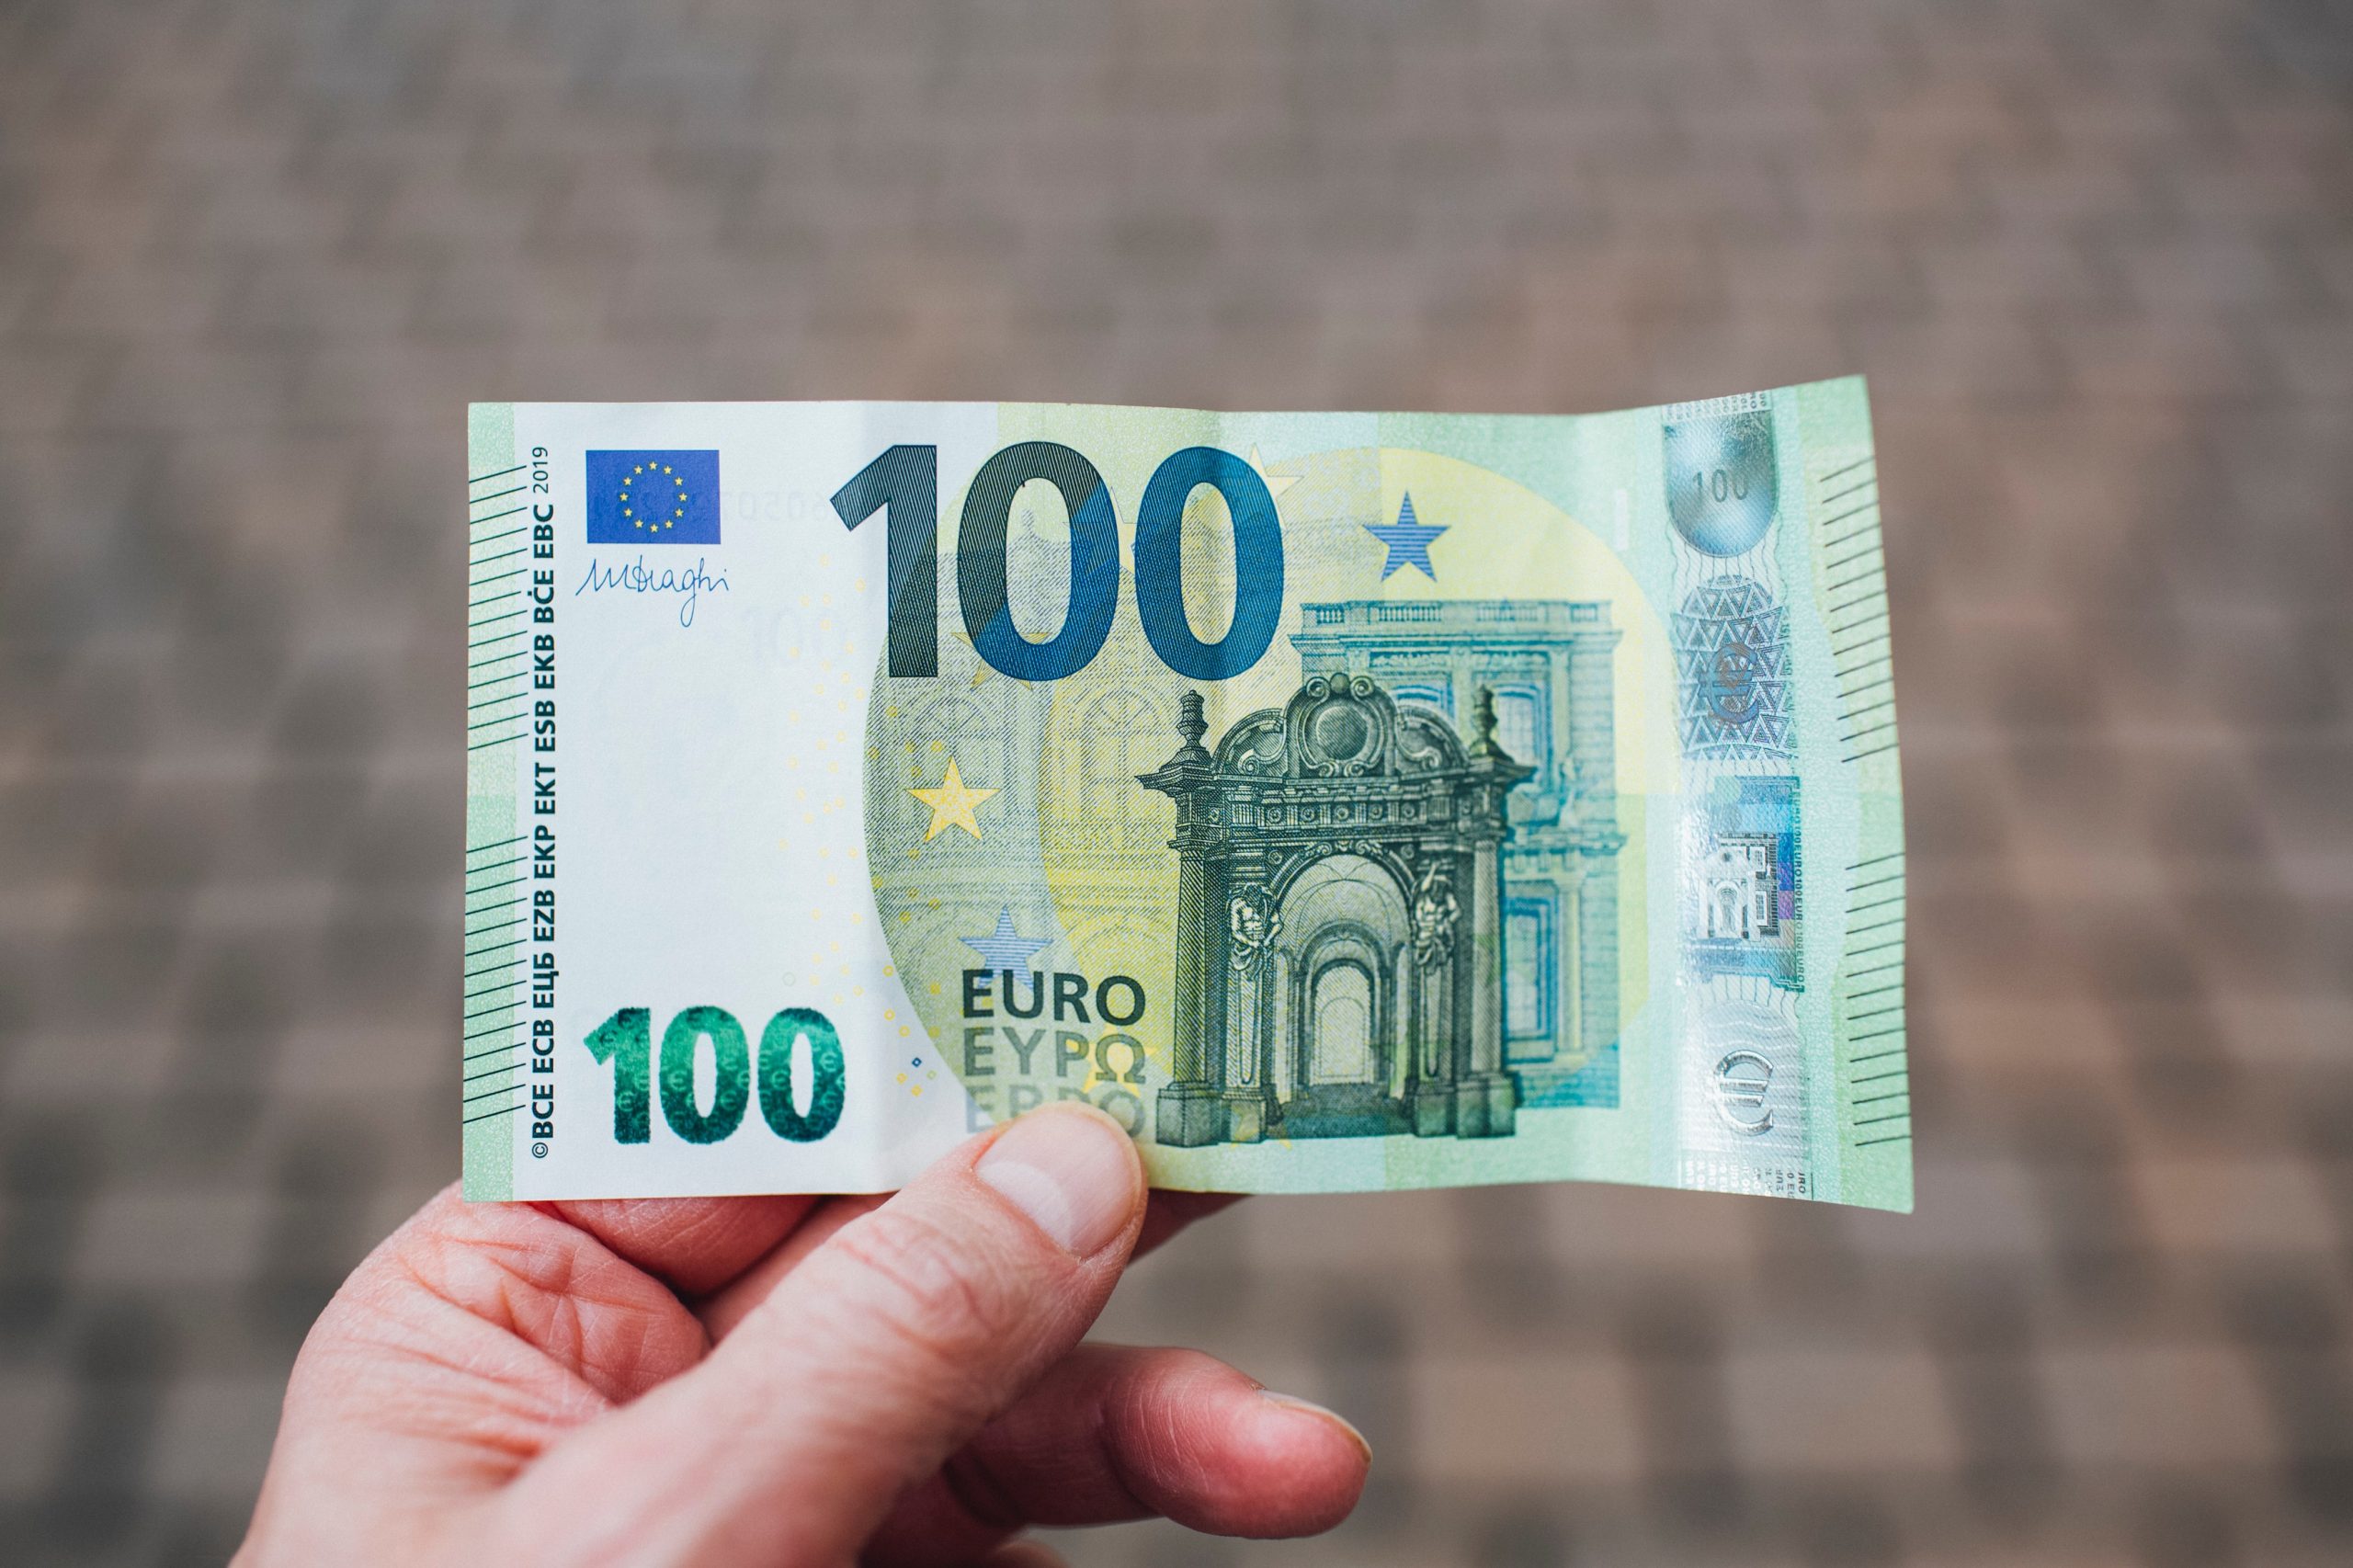 Euro in Croatia